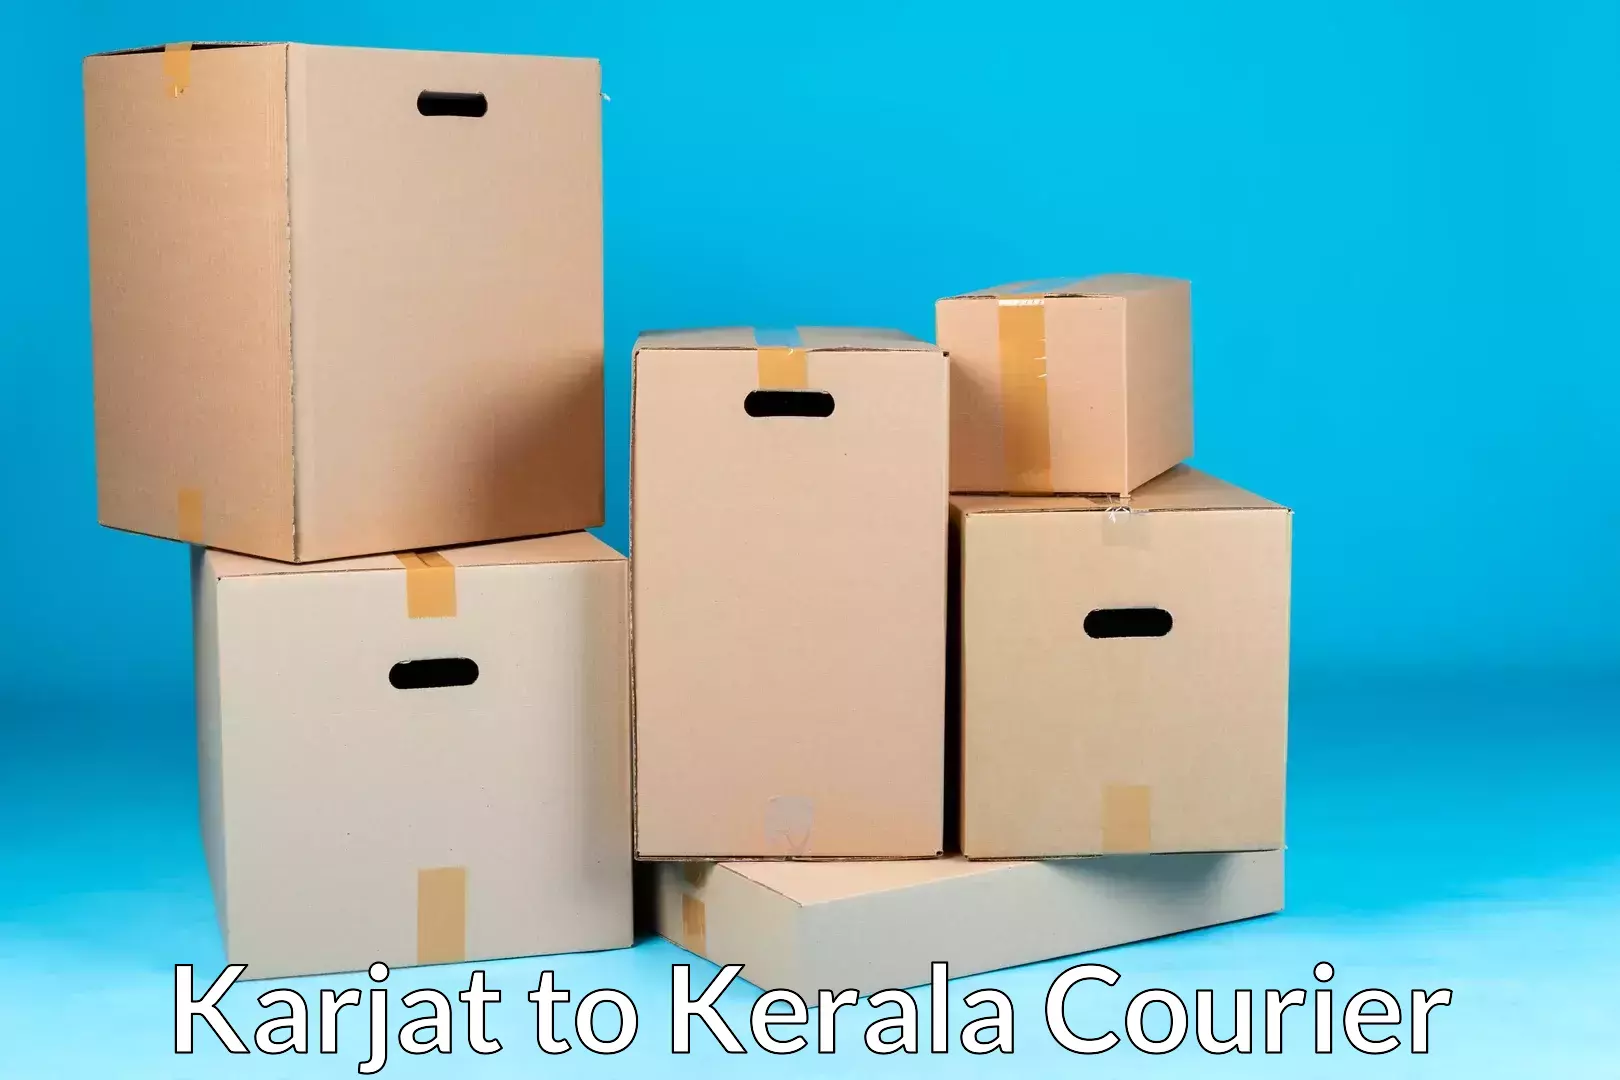 Specialized moving company Karjat to Kerala